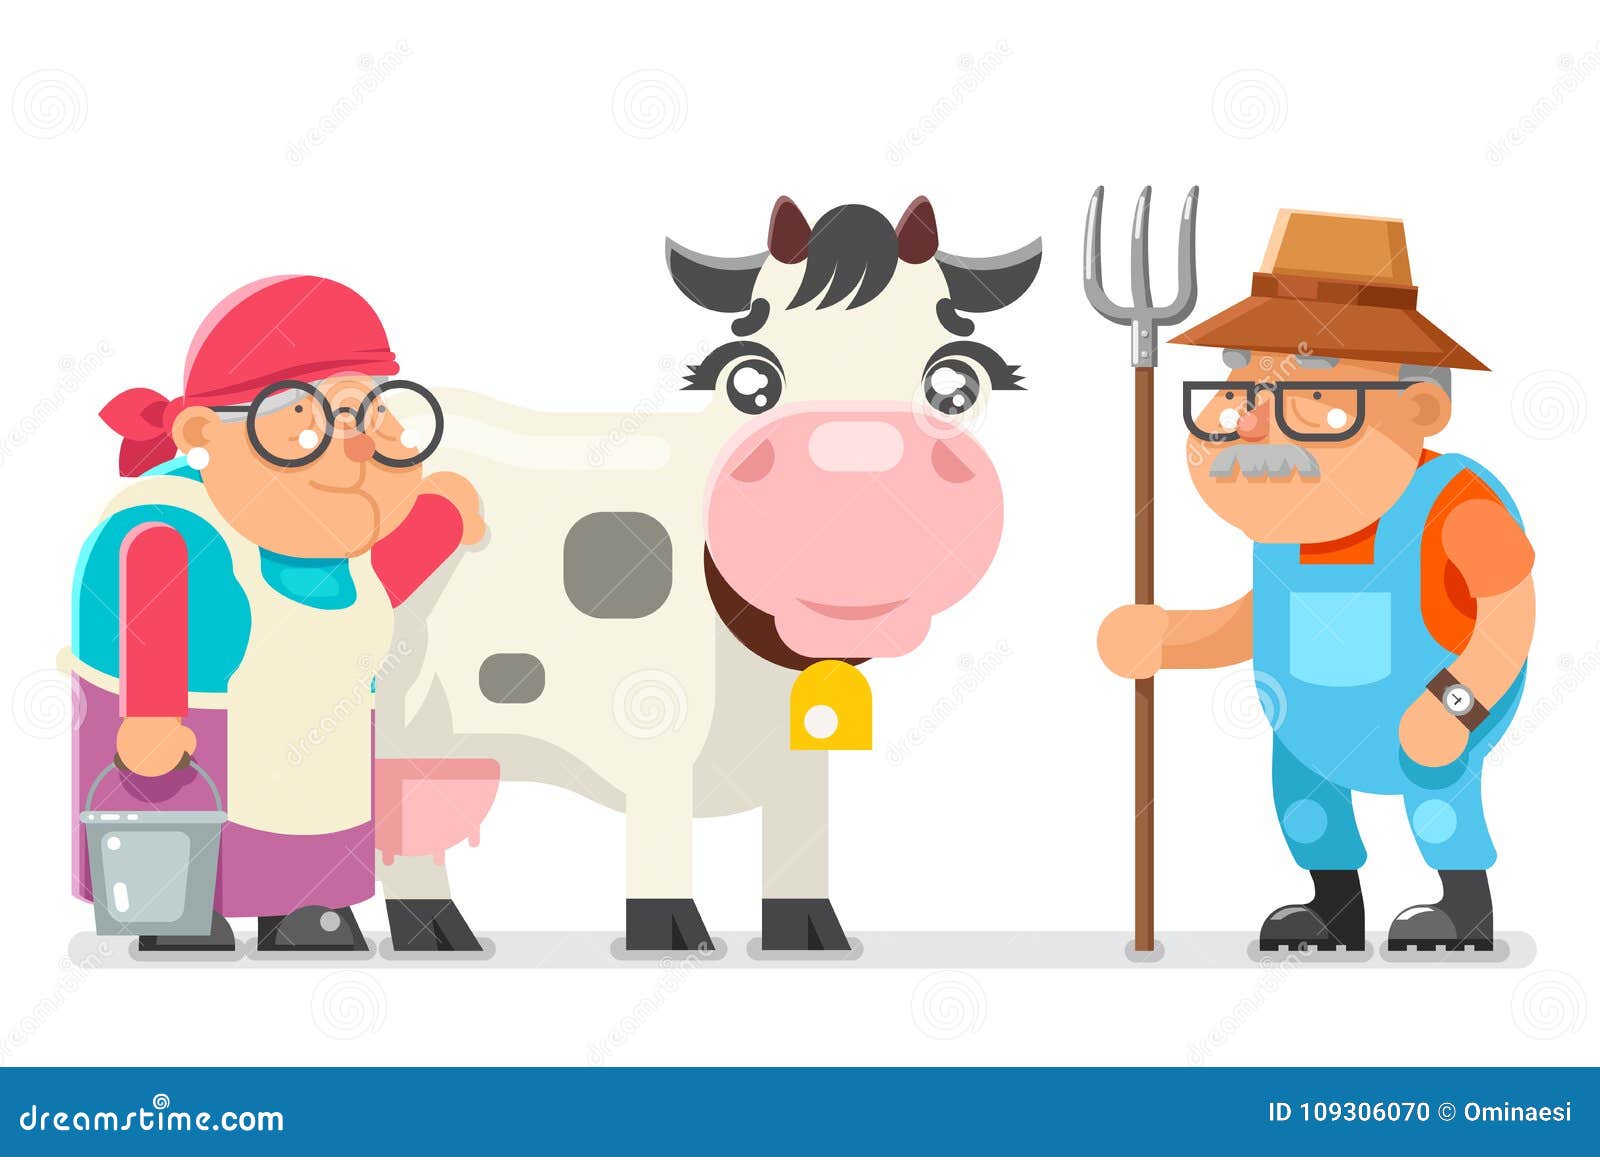 peasant milkmaid farmer granny grandfather adult rancher old age woman man character cartoon villager  flat